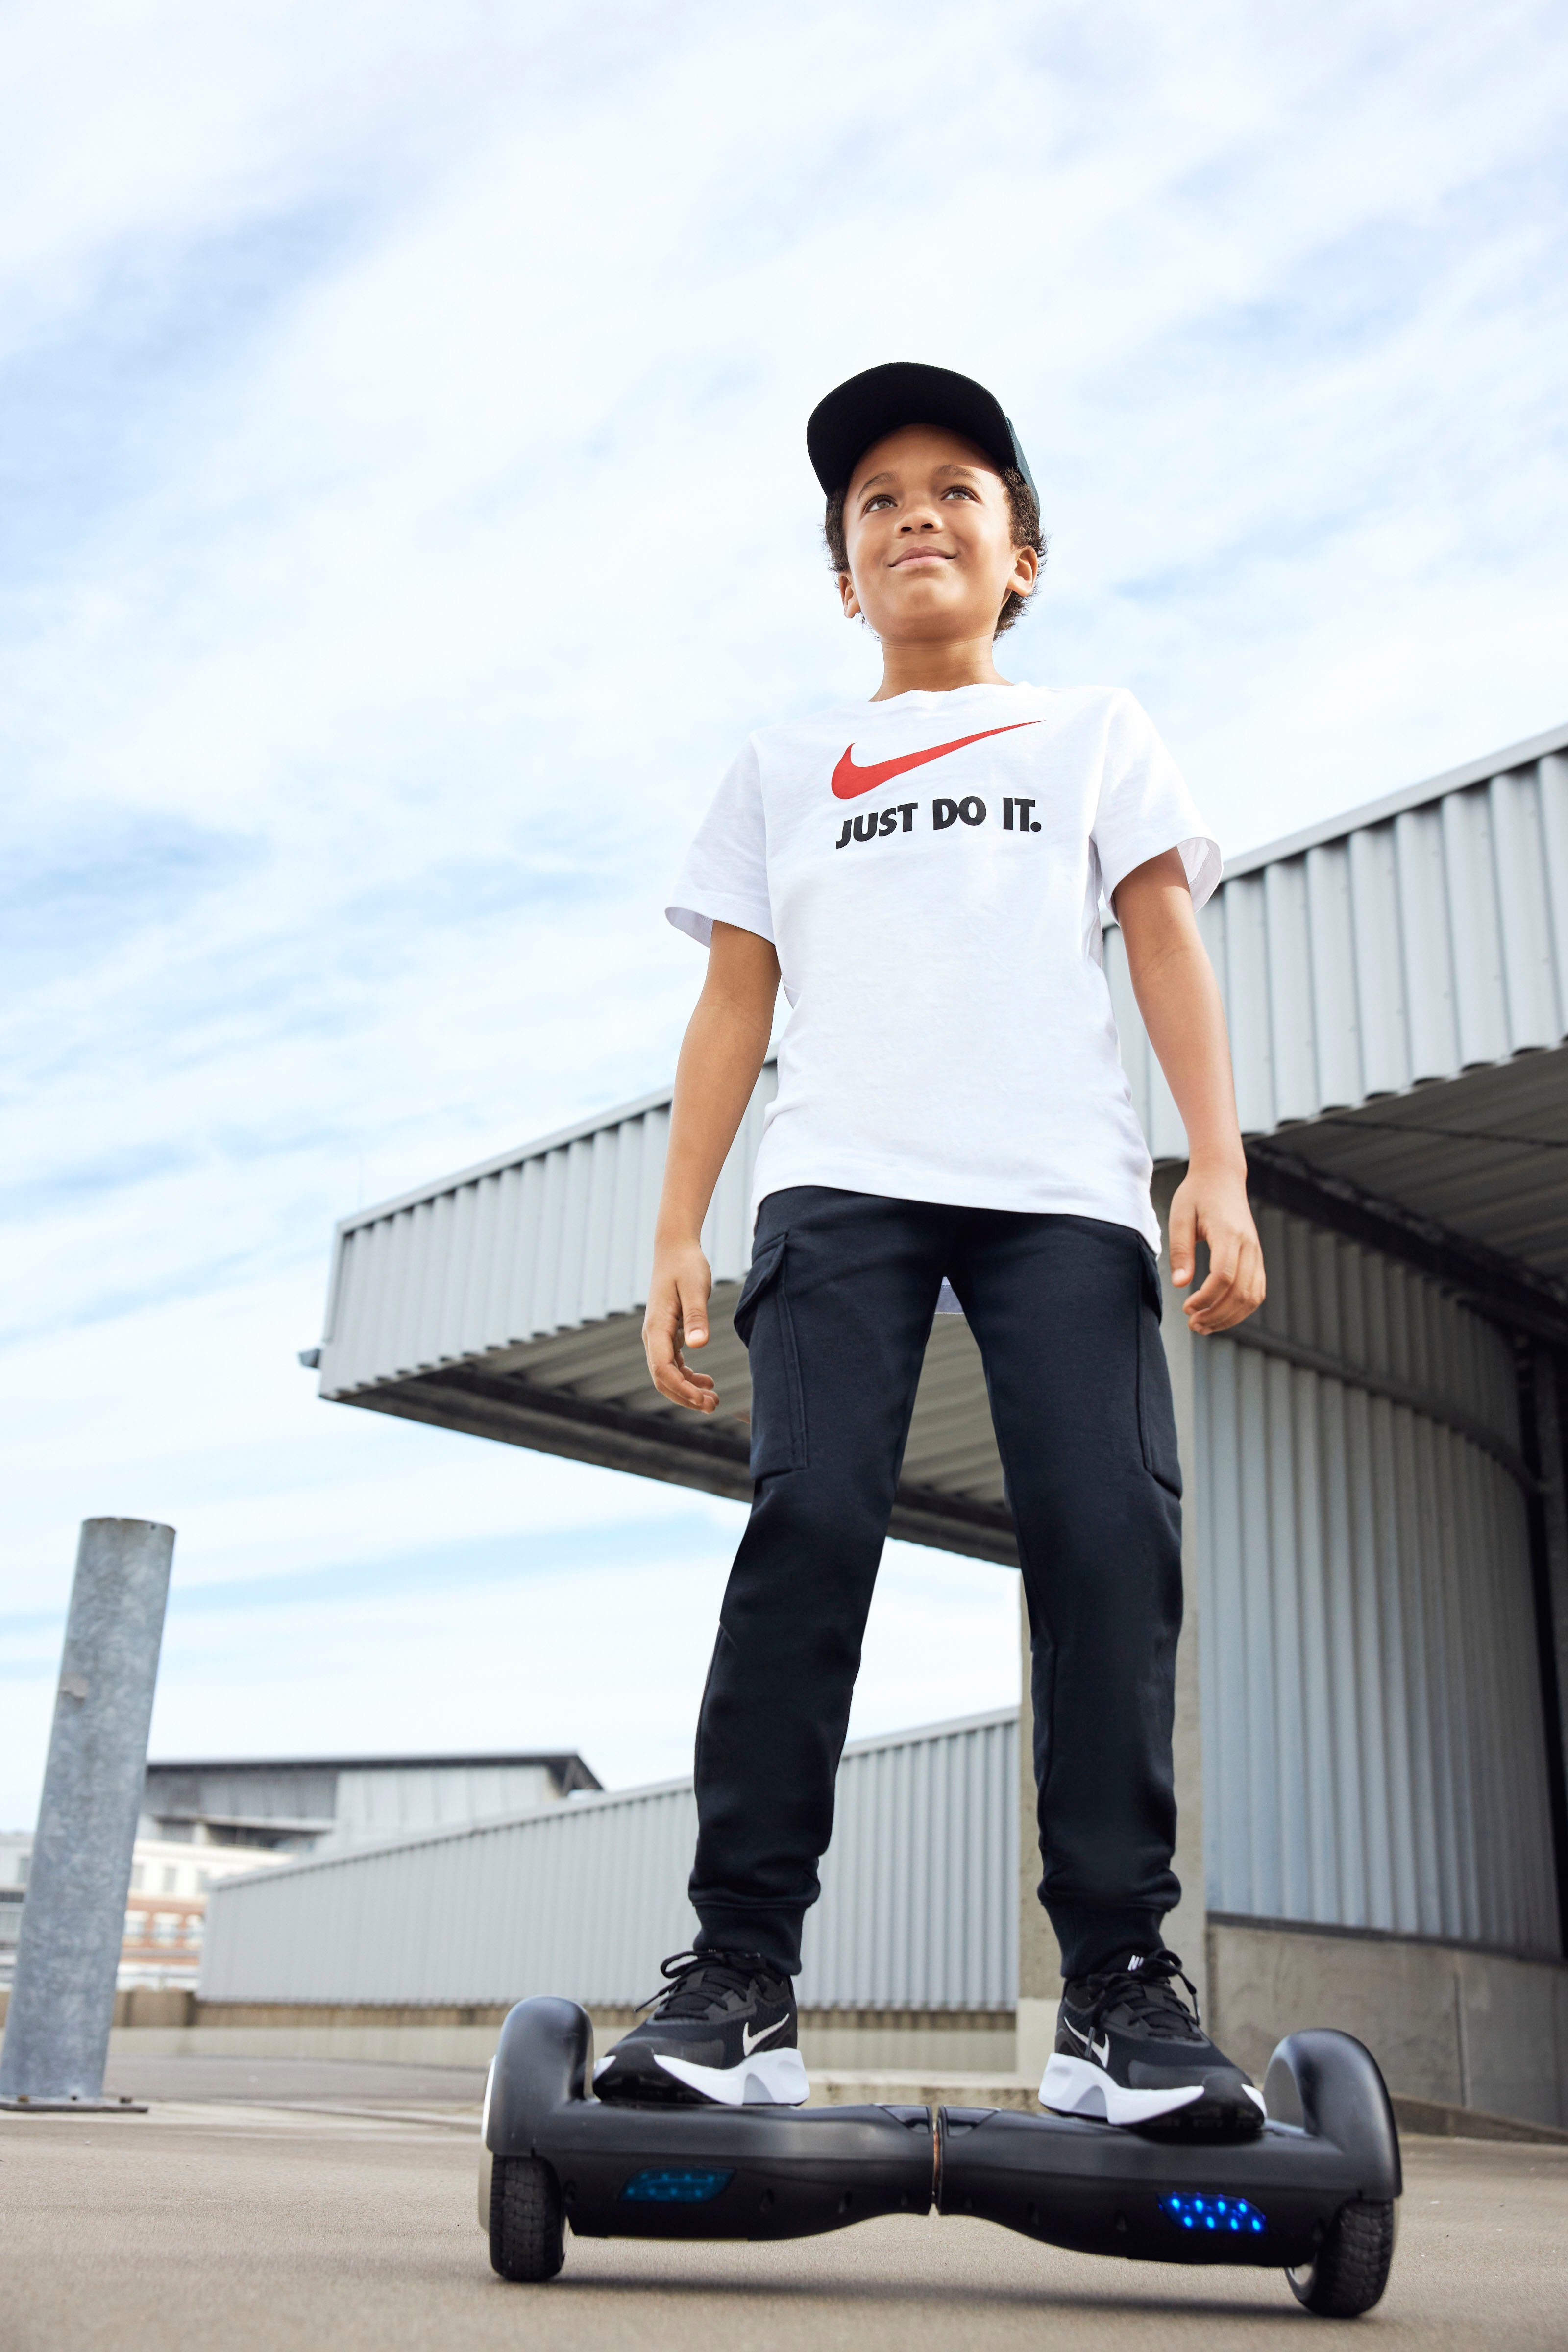 (Boys) Big Pants Jogginghose schwarz Club Kids' Cargo Nike Sportswear